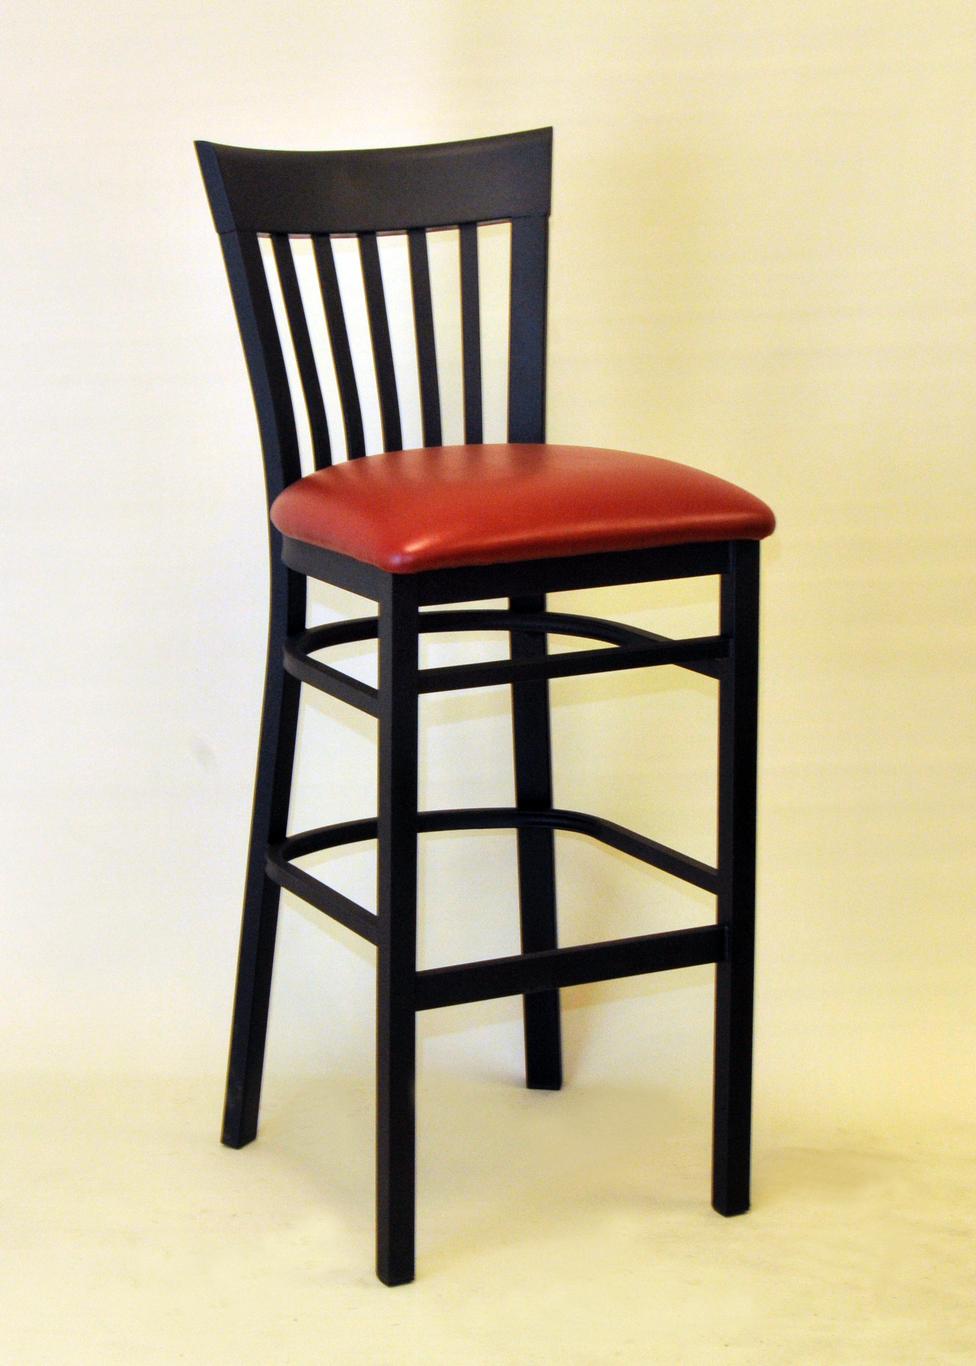 Atlanta Booth & Chair M103BS - Item 141008